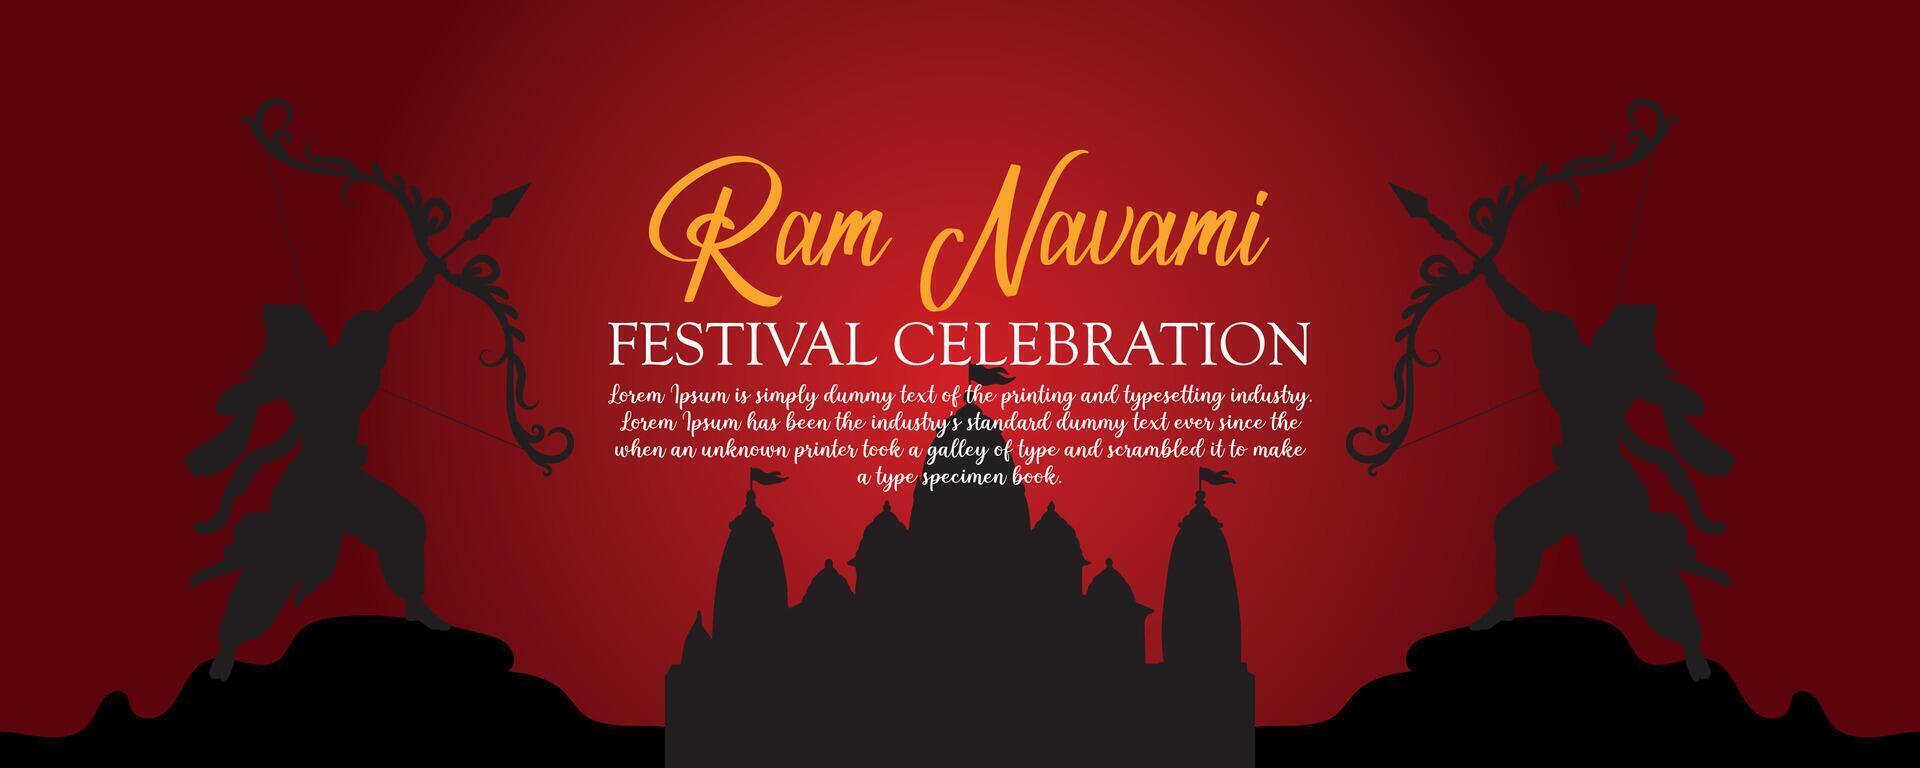 contento RAM navami cultural bandera hindú festival vertical enviar deseos celebracion tarjeta RAM navami celebracion antecedentes vector